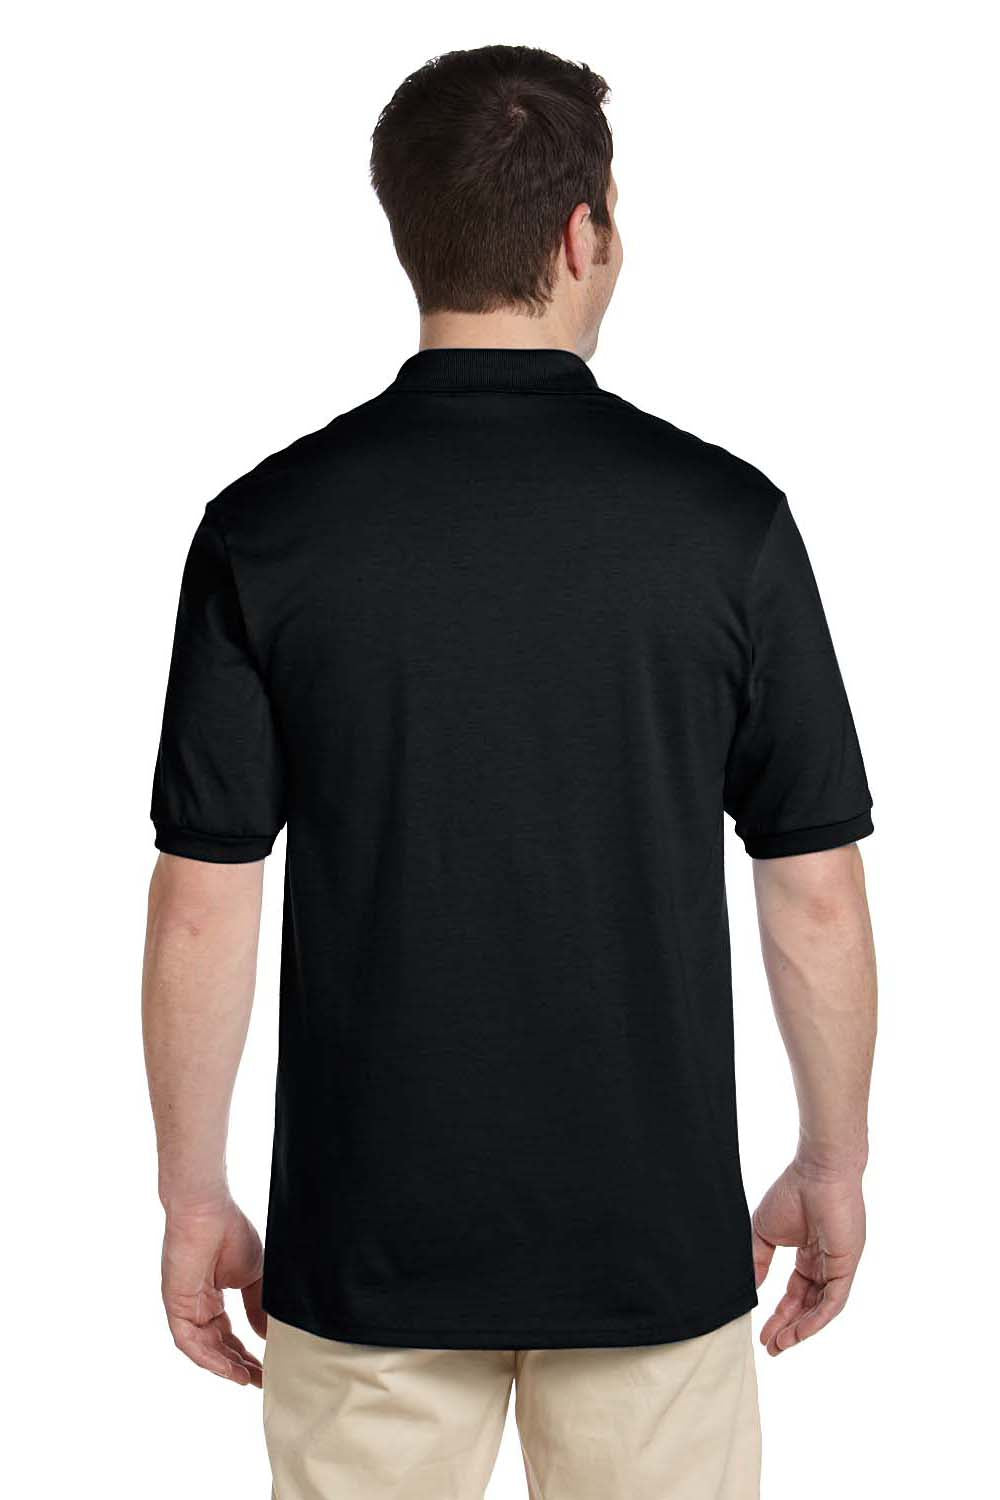 Jerzees 437 Mens SpotShield Stain Resistant Short Sleeve Polo Shirt Black Back